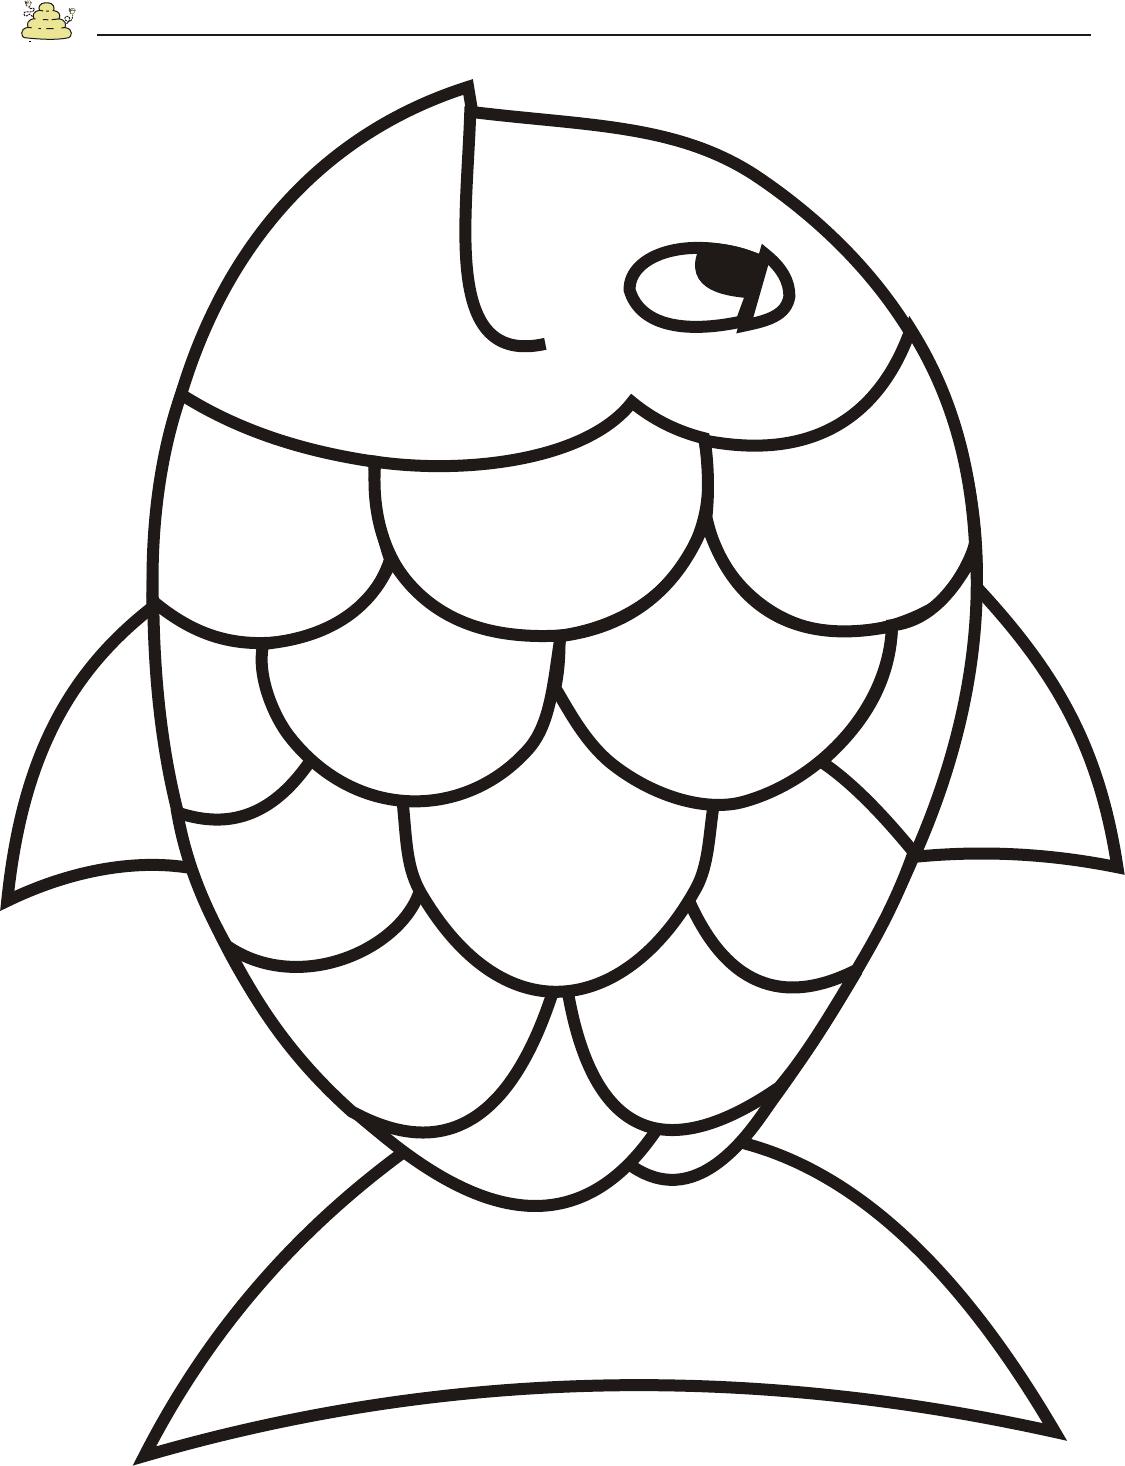 Free Rainbow Fish Template - Pdf | 2 Page(S) | Page 2 | Vbs - Free Printable Fish Stencils